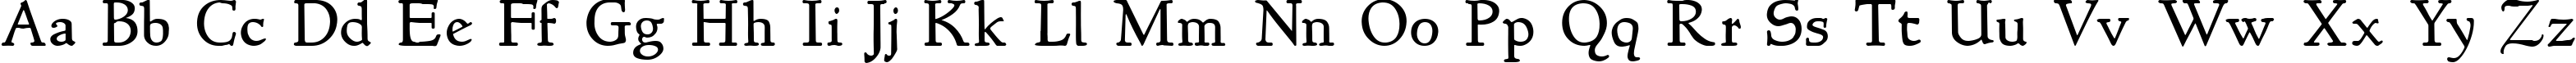 Пример написания английского алфавита шрифтом NewStyle